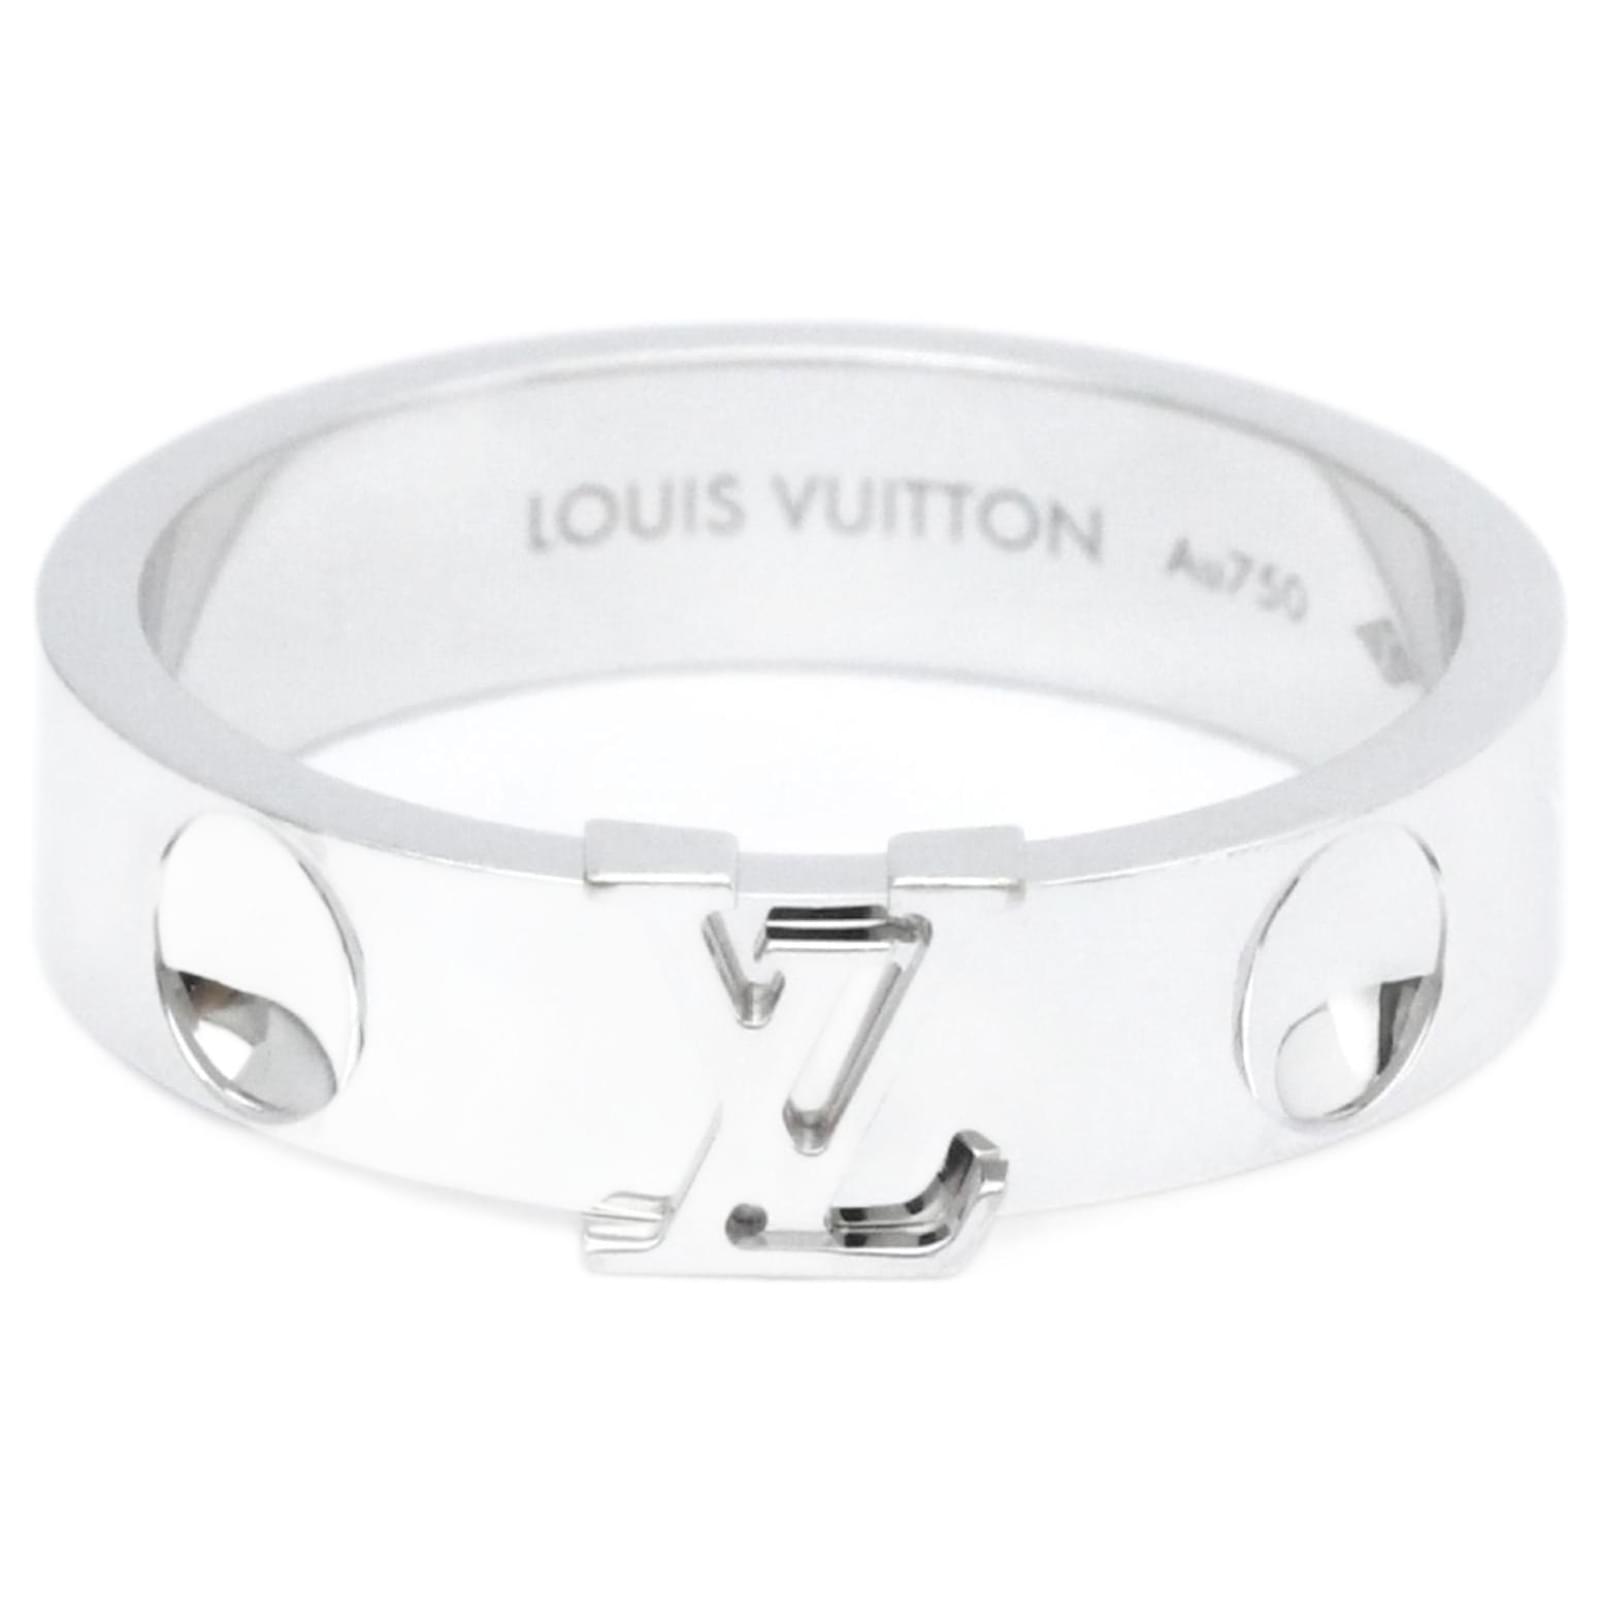 Louis Vuitton Empreinte 18 Karat White Gold Band Ring